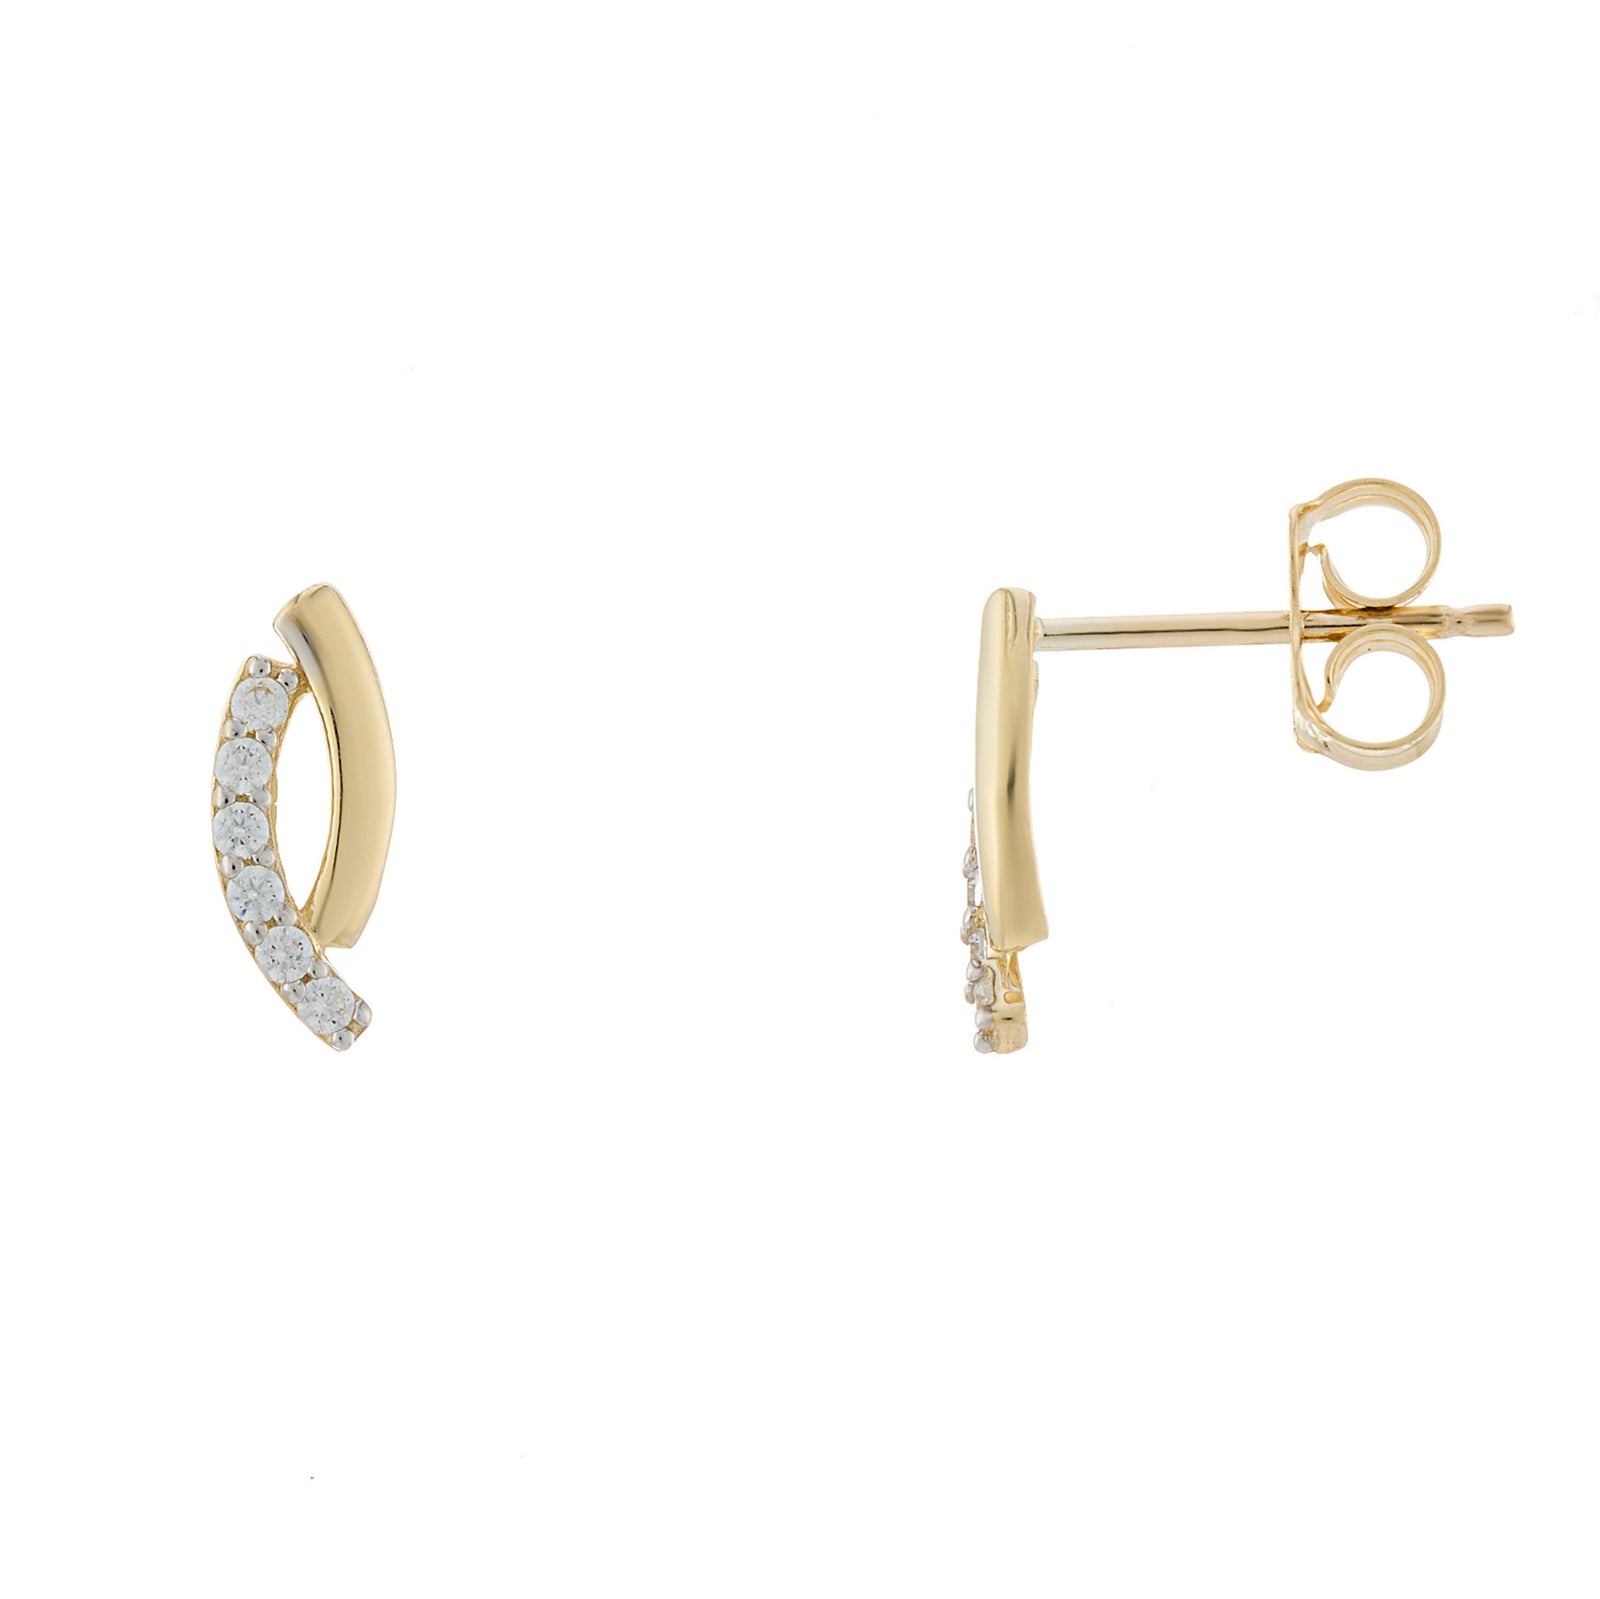 9ct gold cz stud earrings